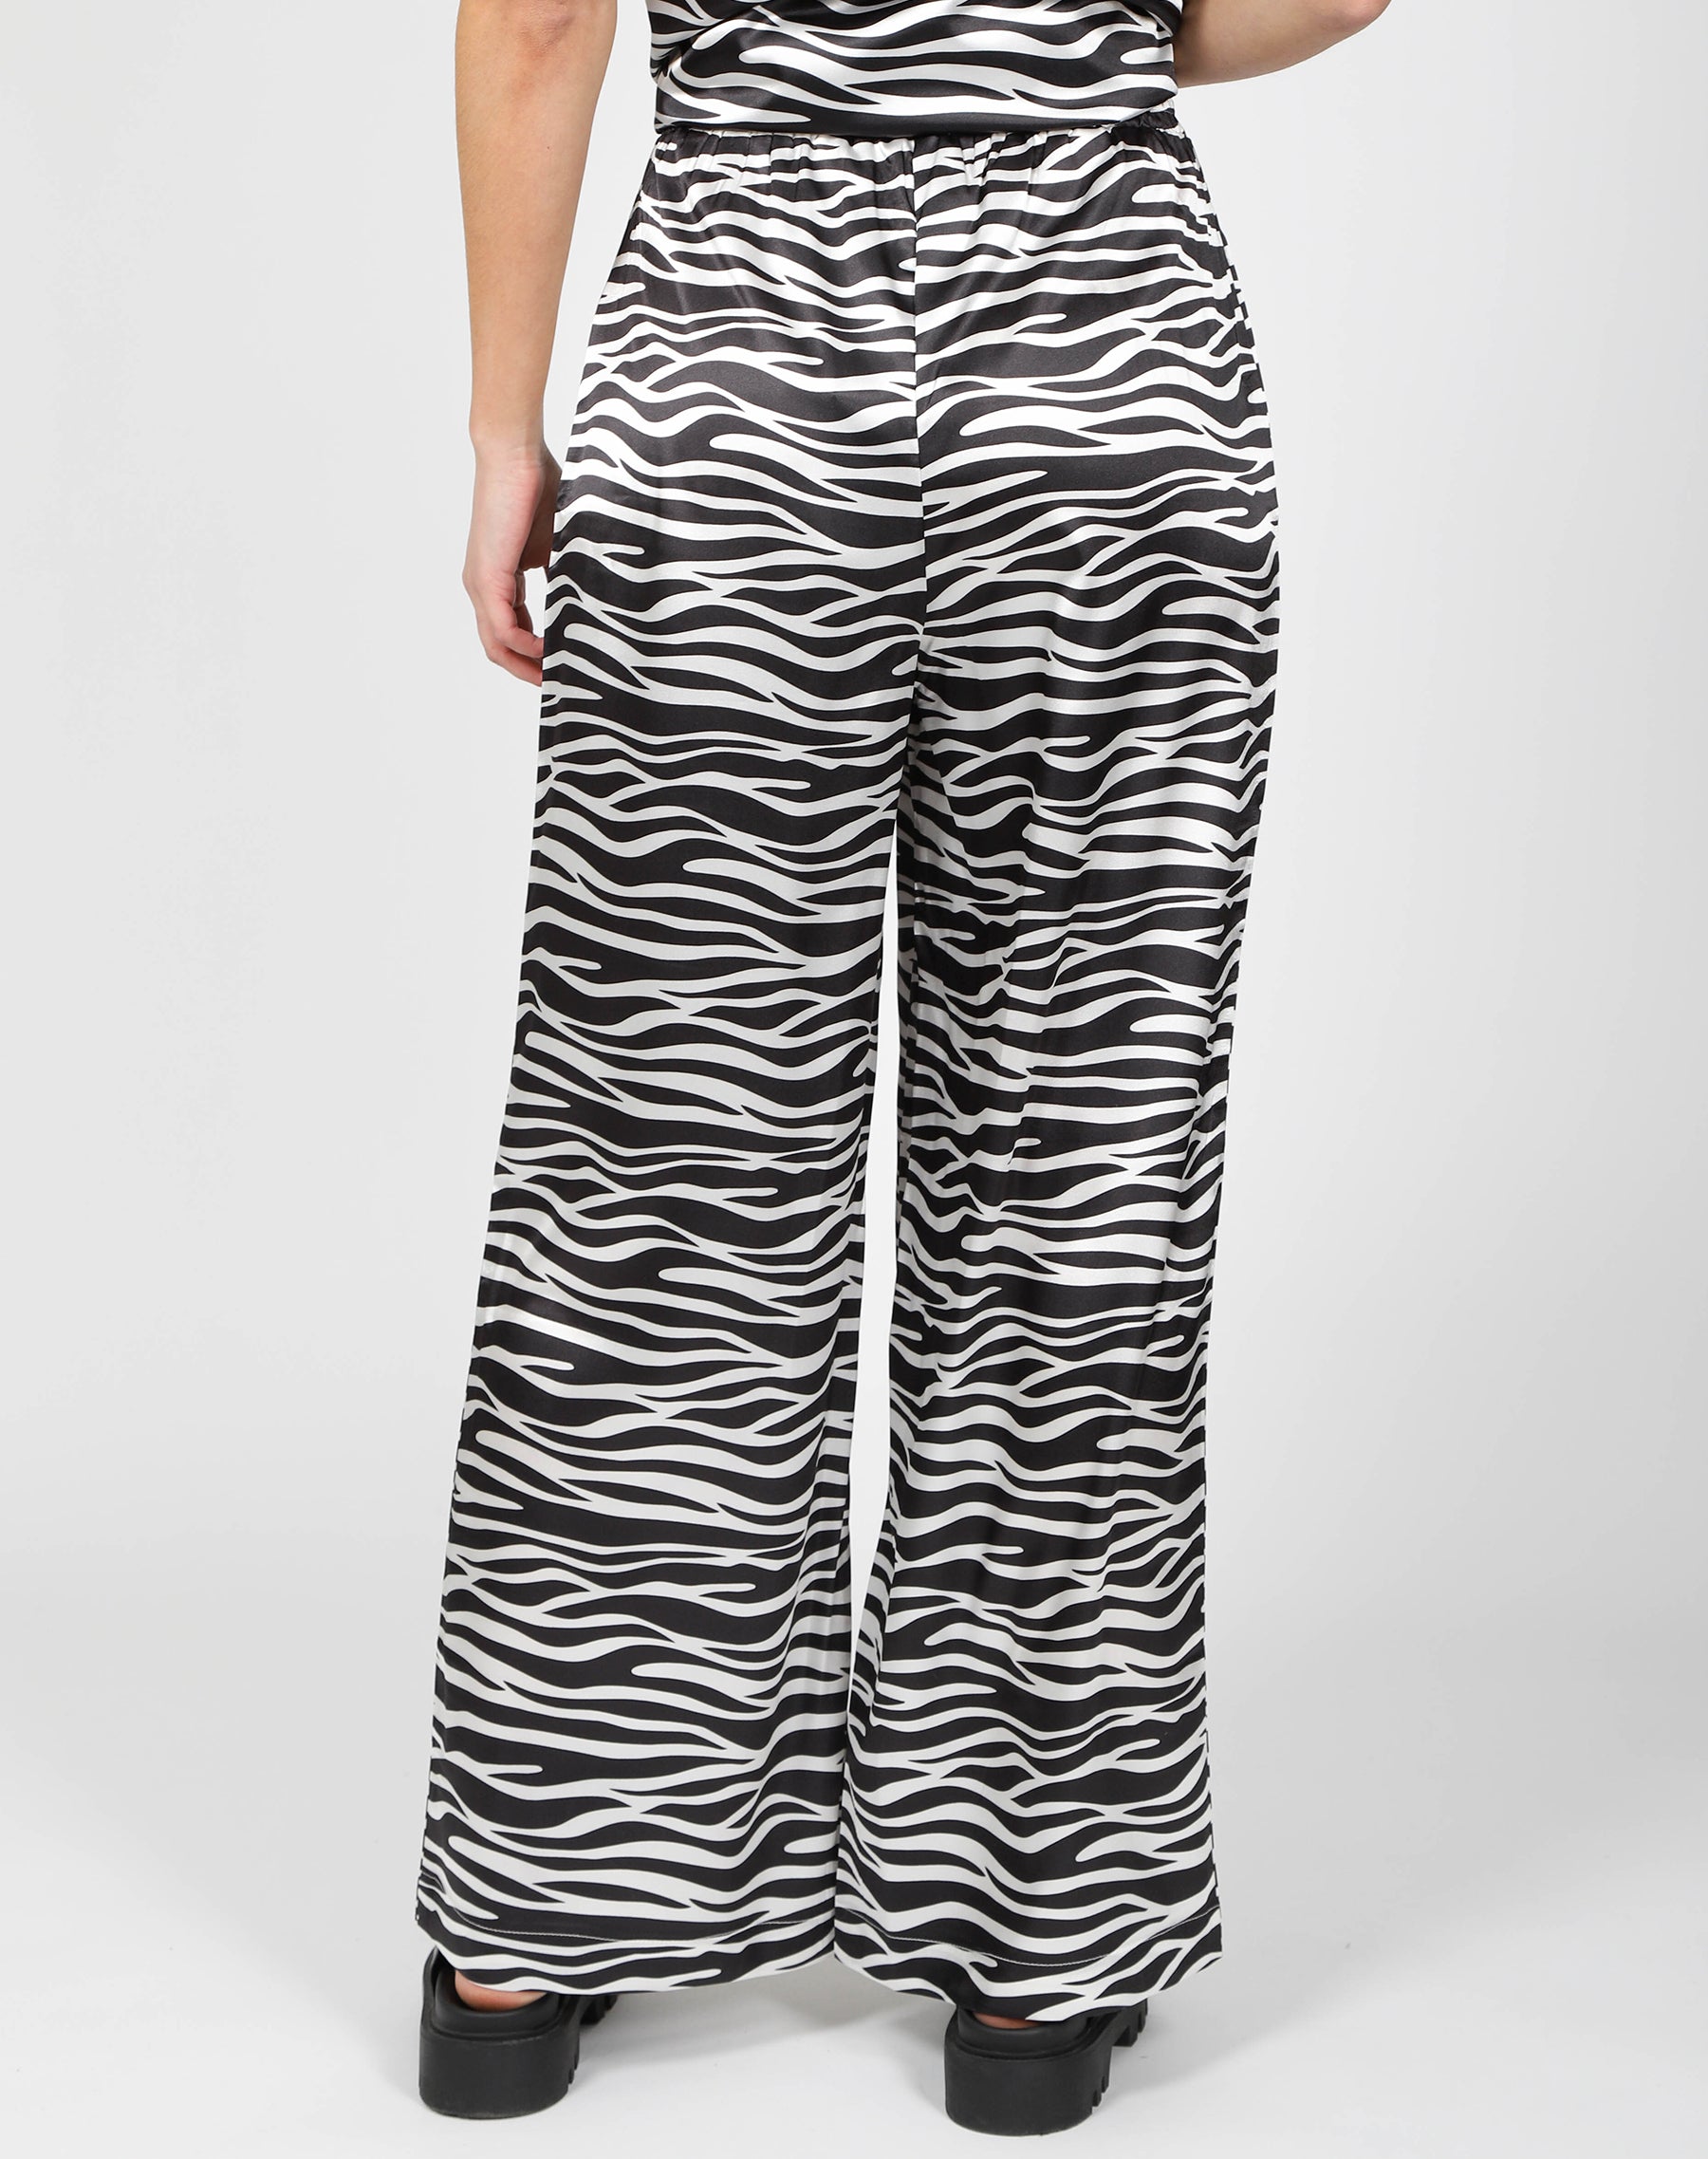 The "STEVIE" Silk Straight Leg Pant | Zebra